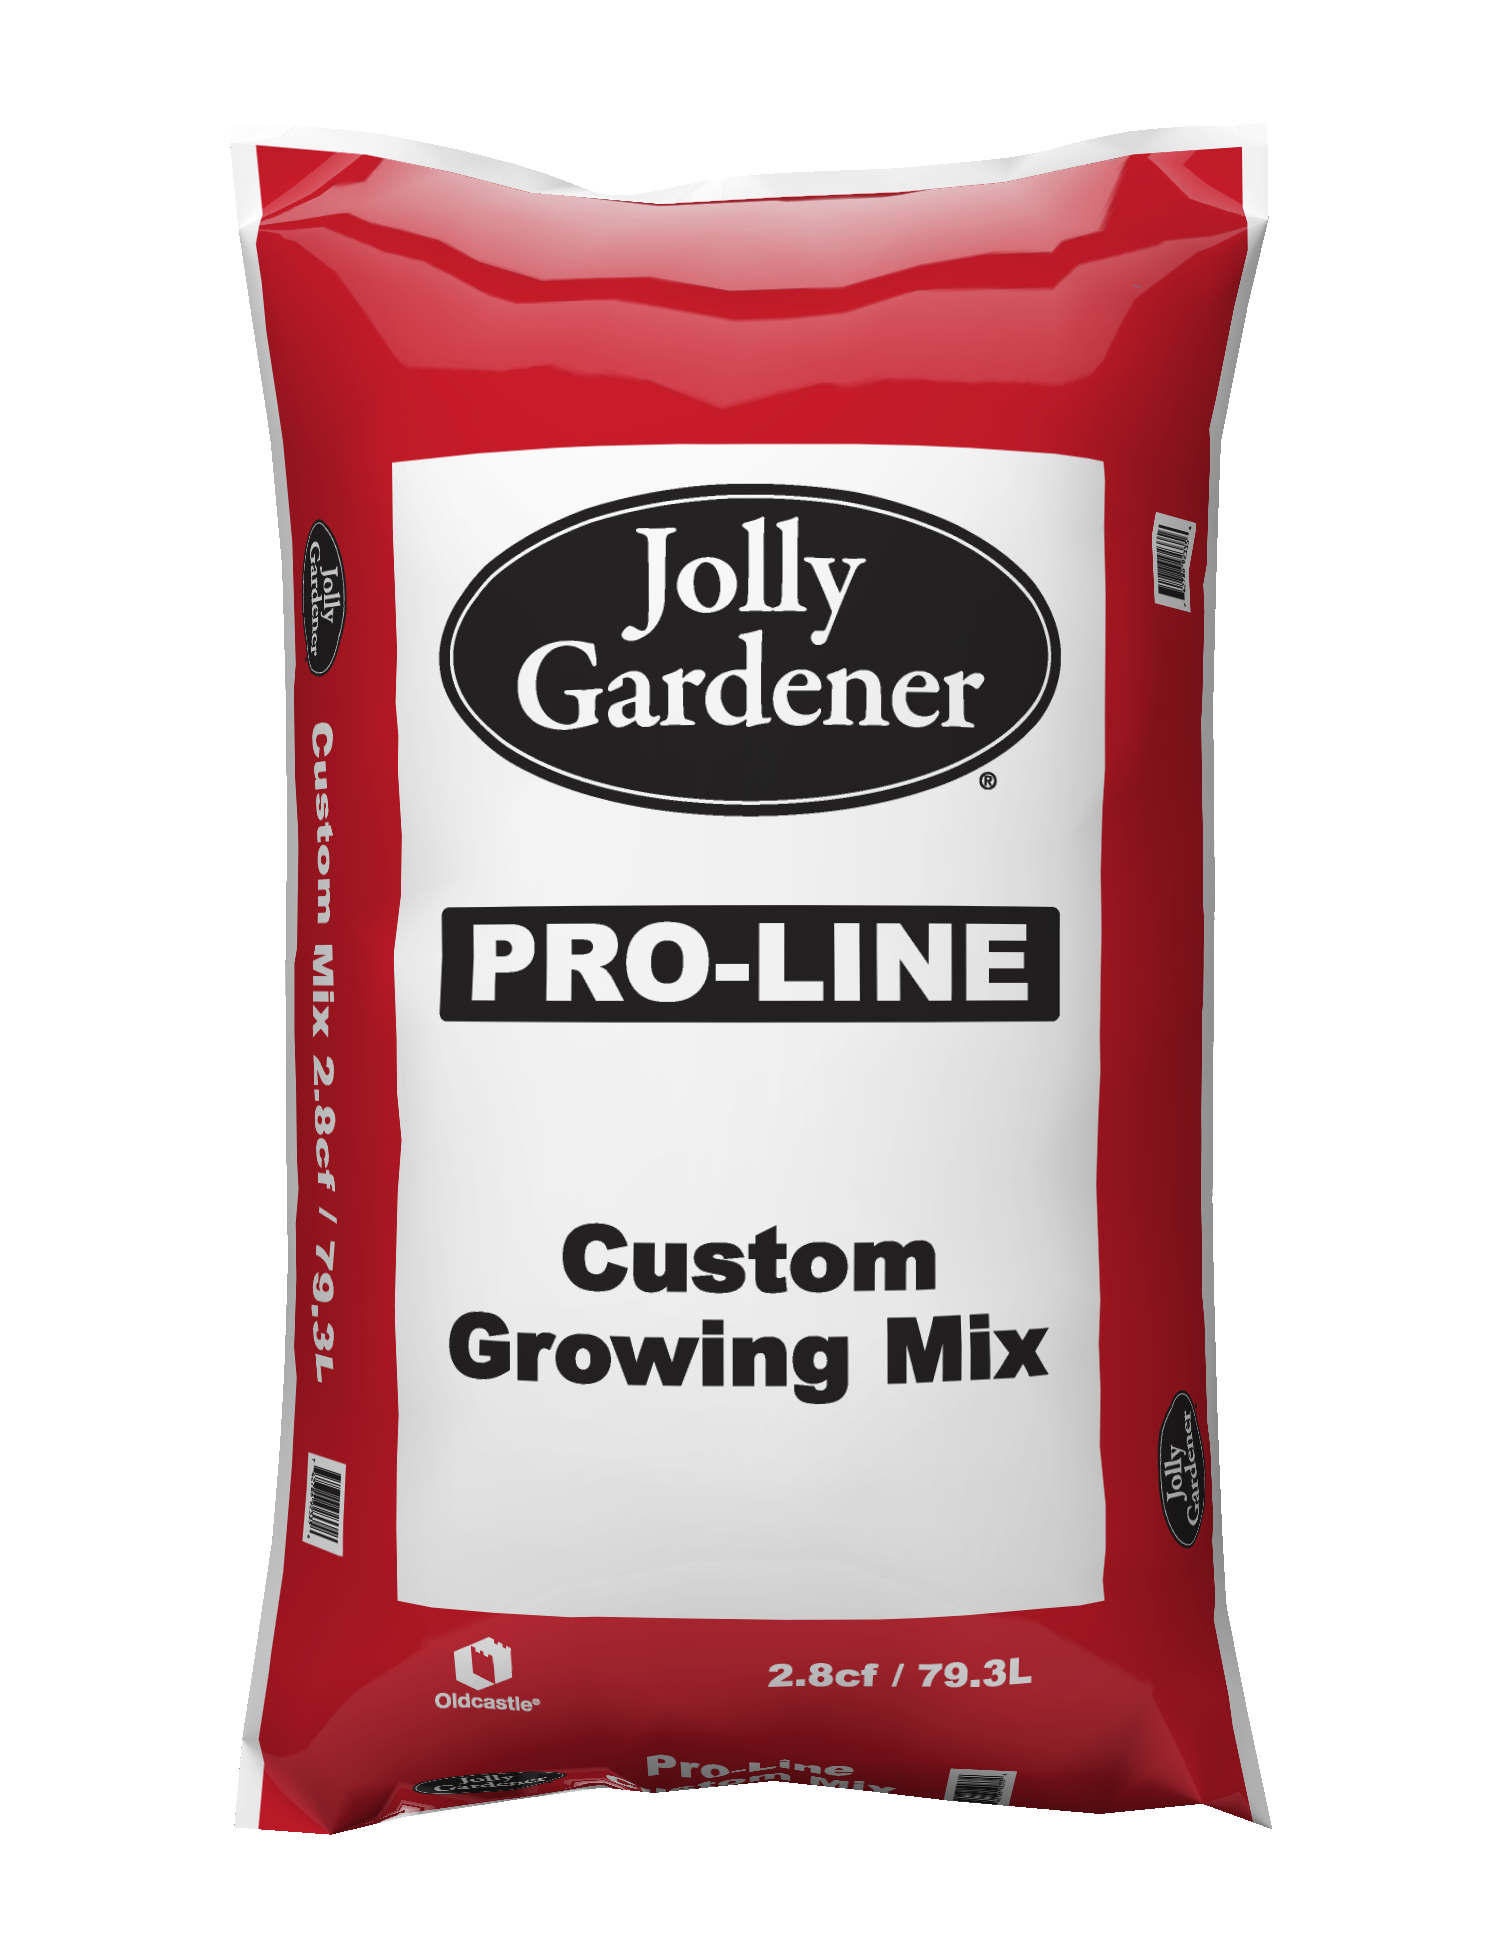 Jolly Gardener PRO-LINE 44N 2.8 cu. ft. Bag